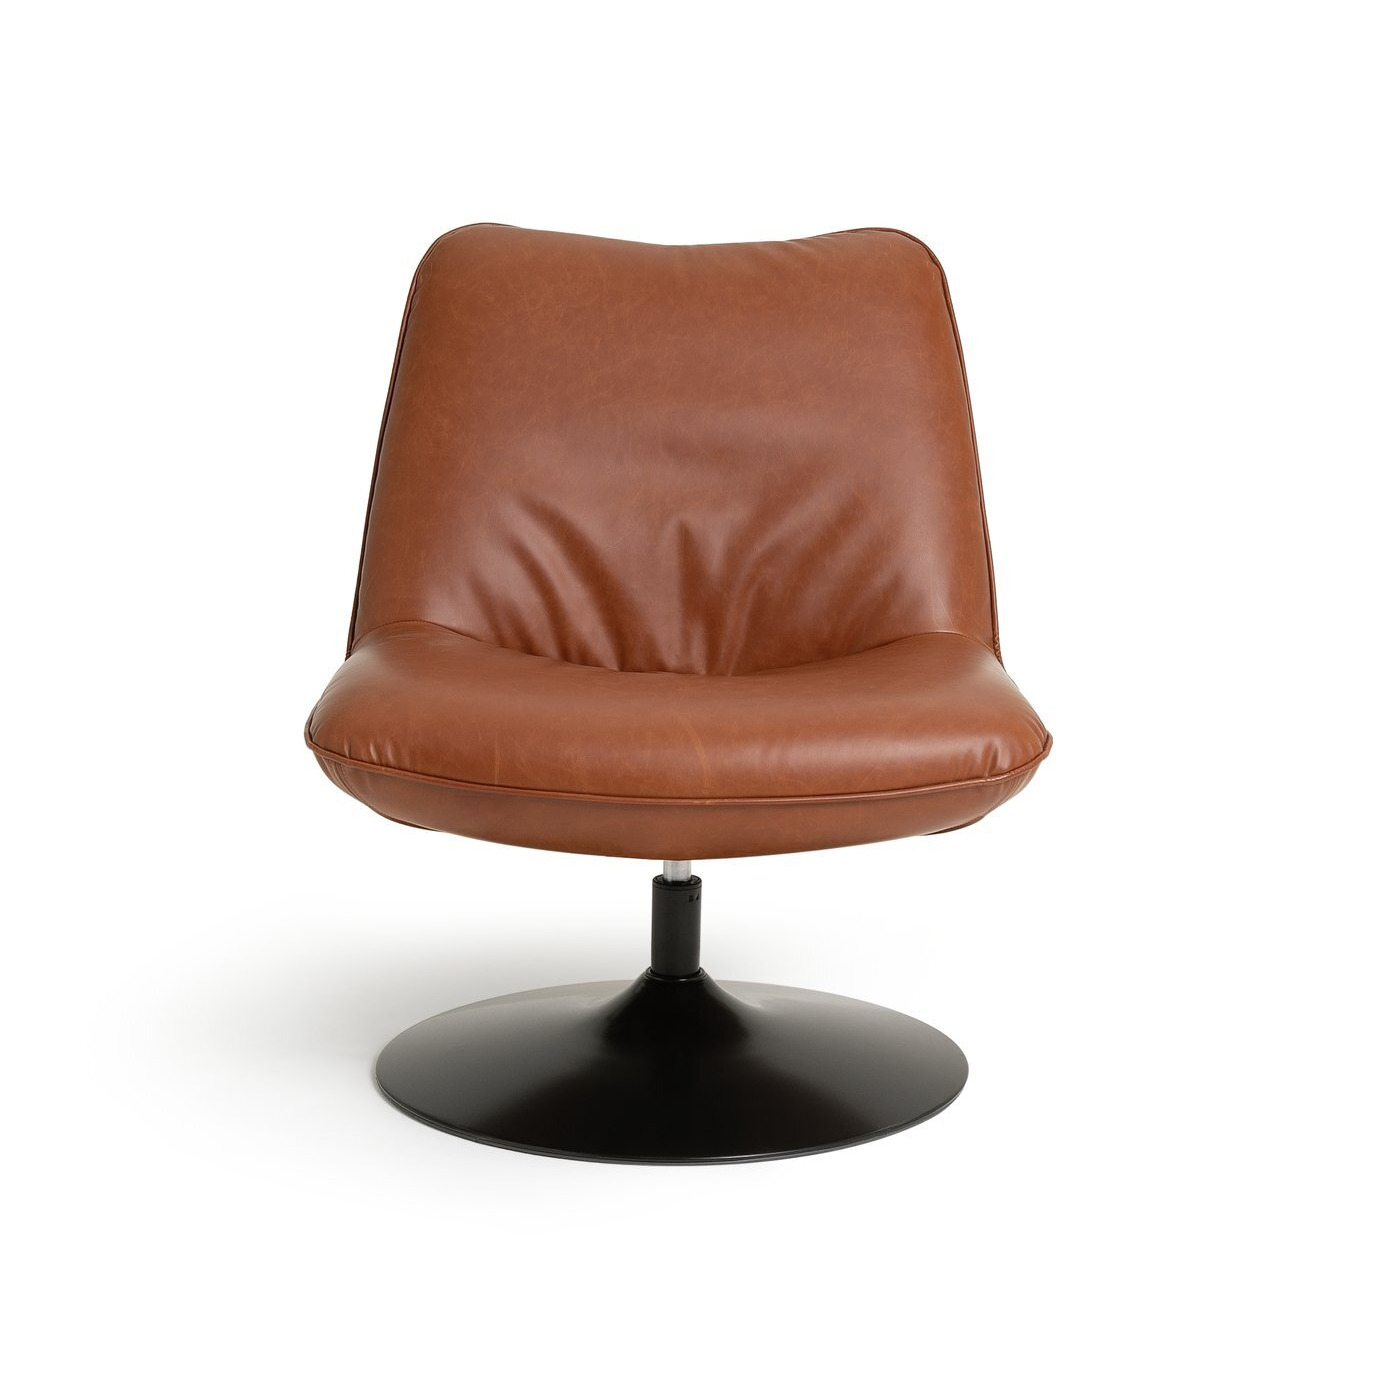 Habitat Nanna Faux Leather Swivel Chair - Tan - image 1